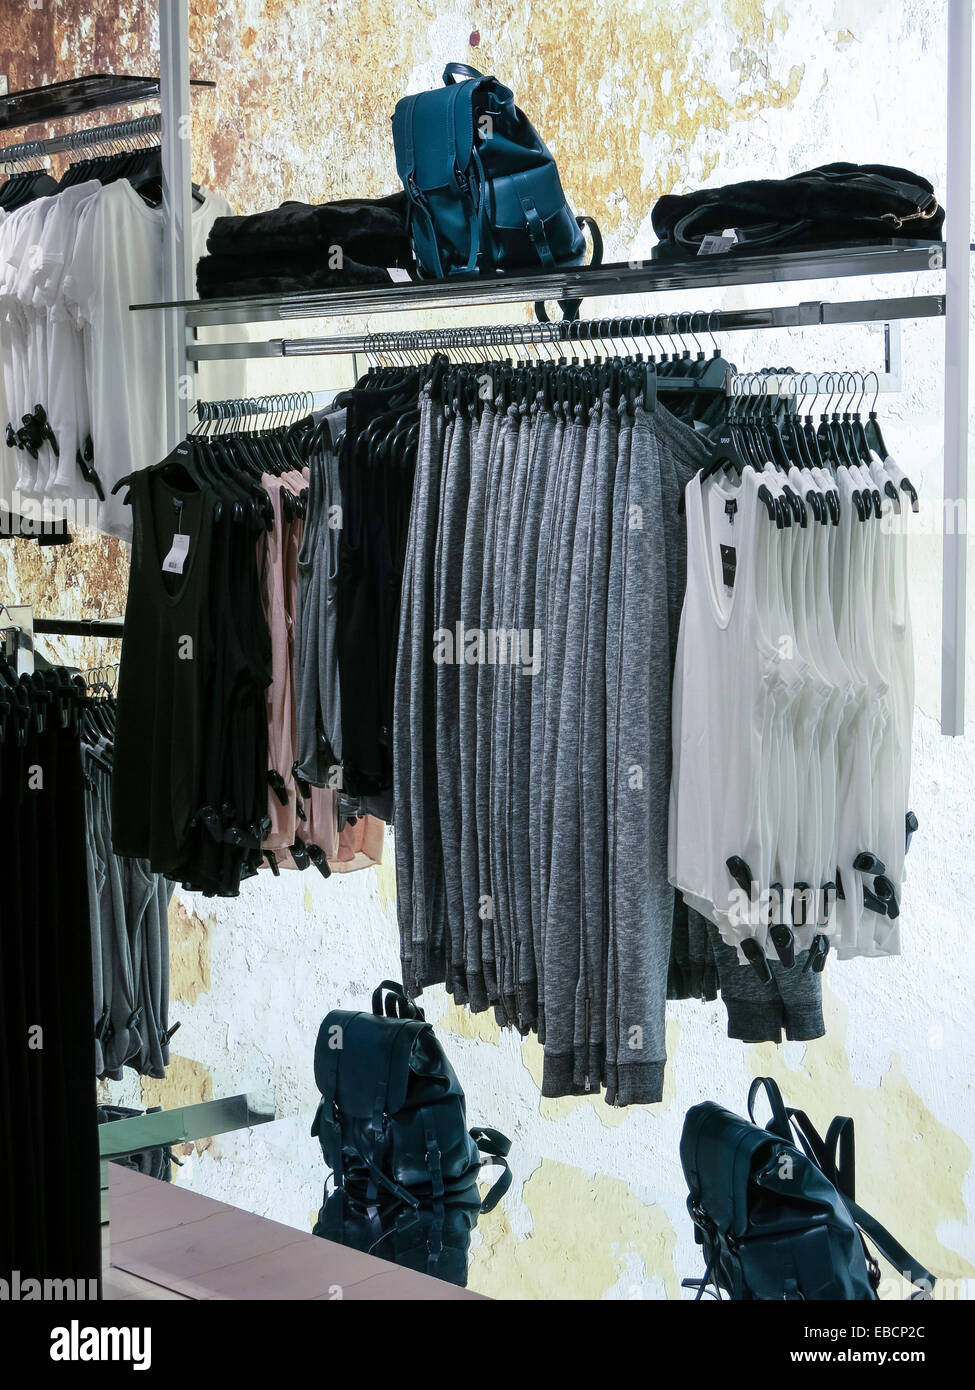 Topshop/Topman  Fashion Retailer on Fifth Avenue, NYC Stock Photo